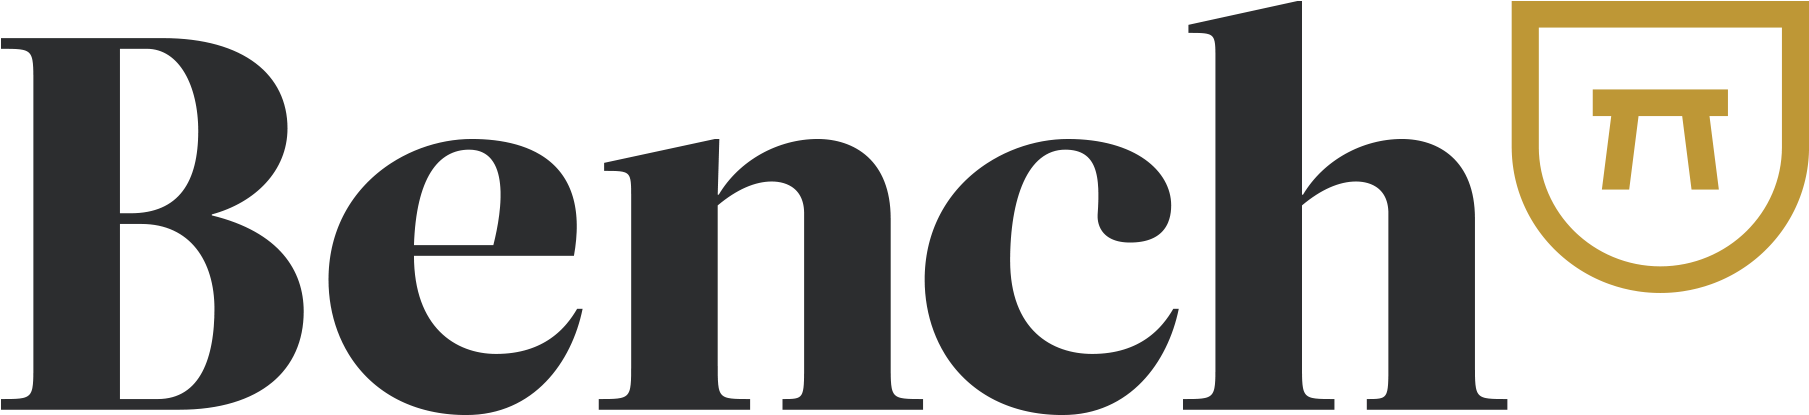 PHCC Connect logo